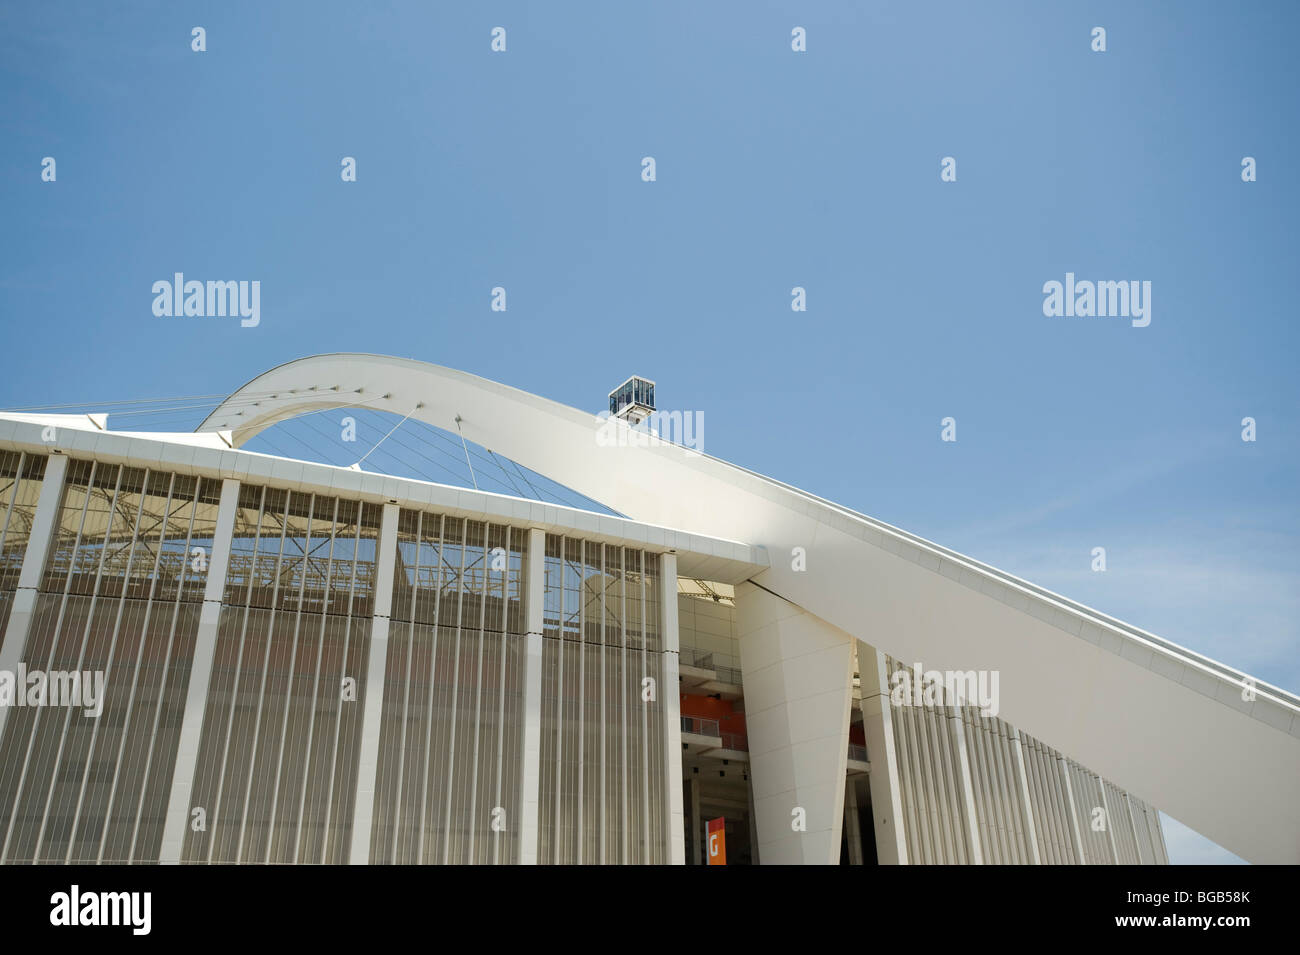 The Durban Moses Mabhida Soccer Stadium Sky Ride. Durban, South Africa Stock Photo